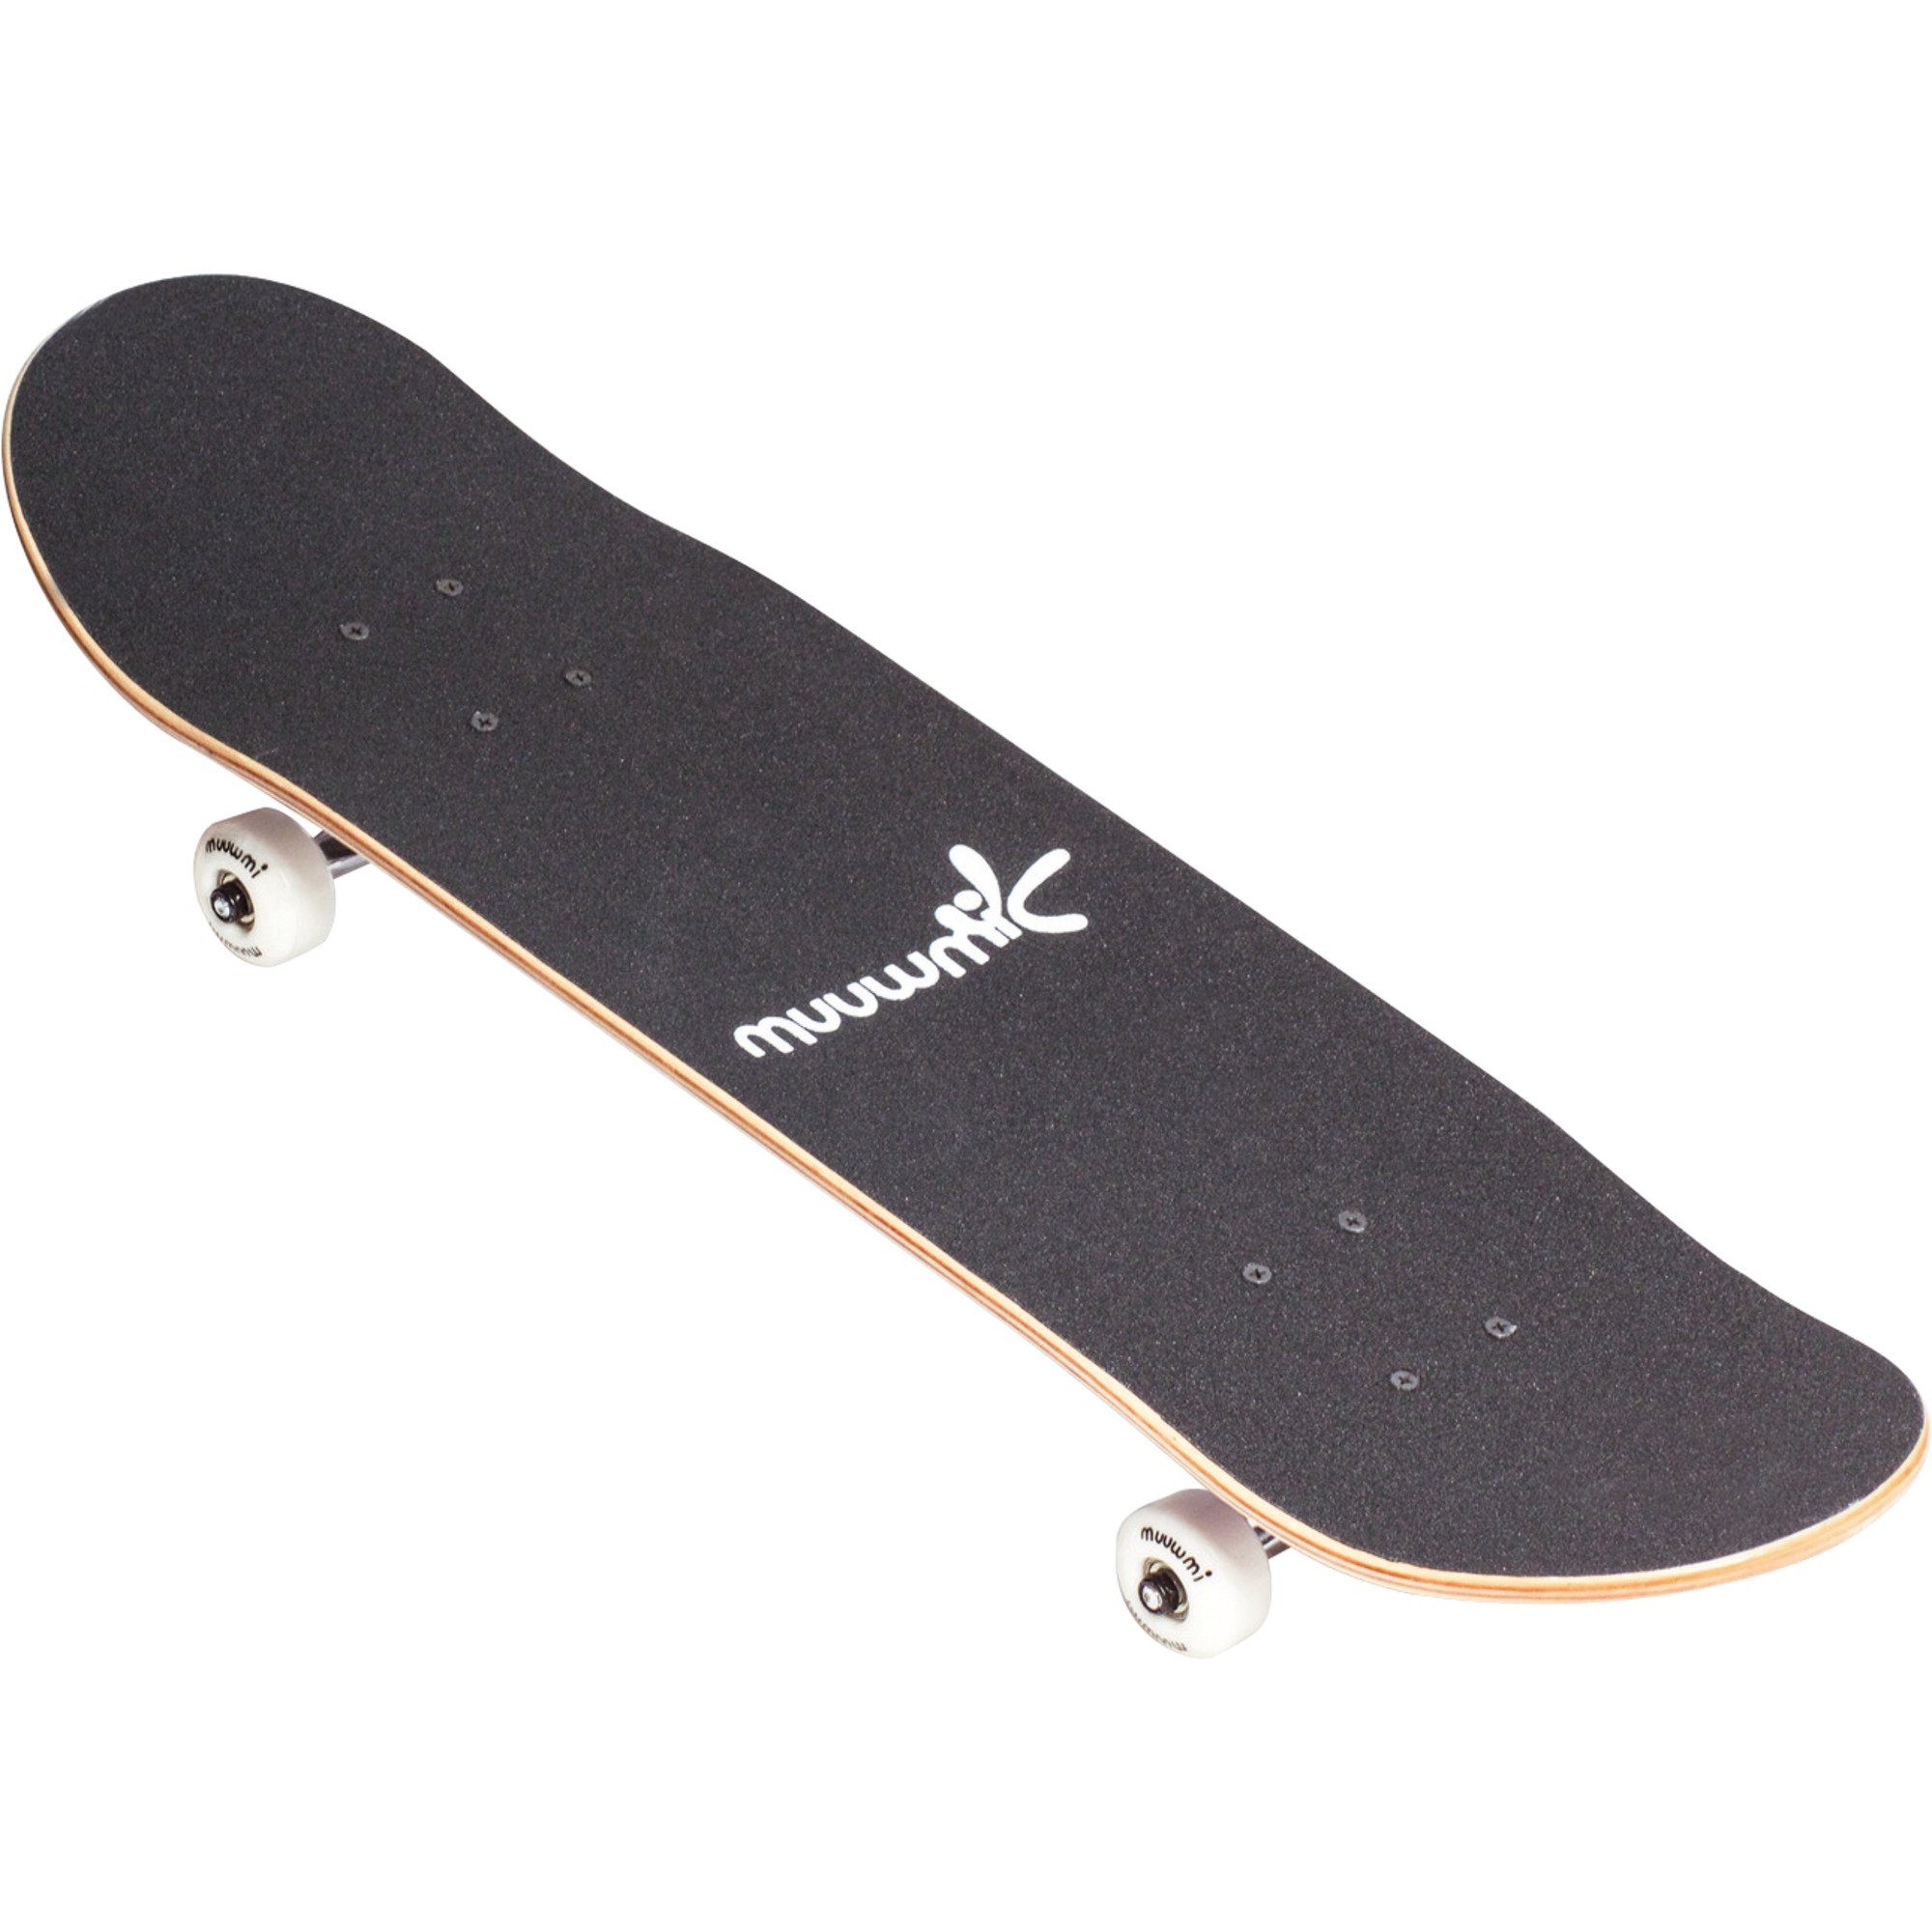 Muuwmi Skateboard Muuwmi 5 Skateboard ABEC Rocket